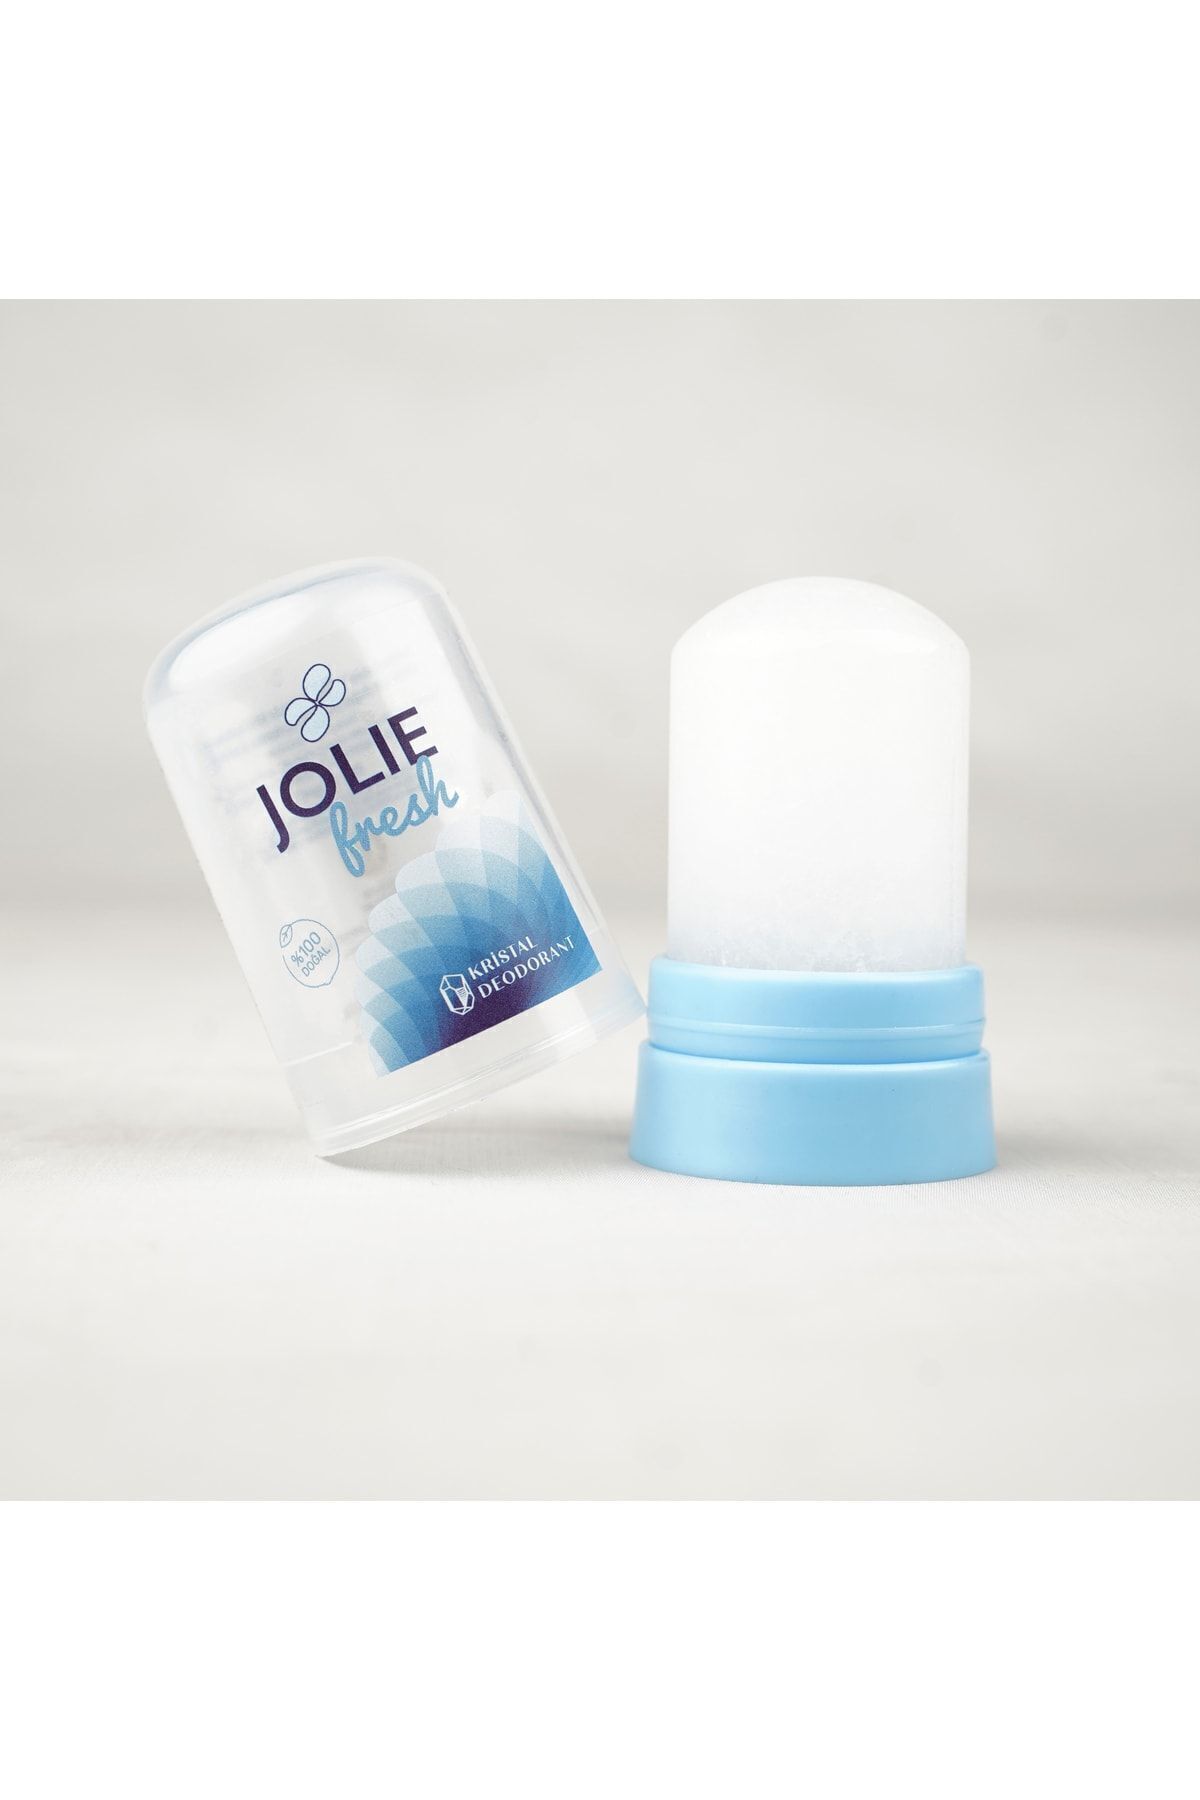 Jolie Fresh Doğal Deodorant Mineralli Roll-on Taş Deodorant Ter Kokusu Karşıtı Kristal 100 Gr